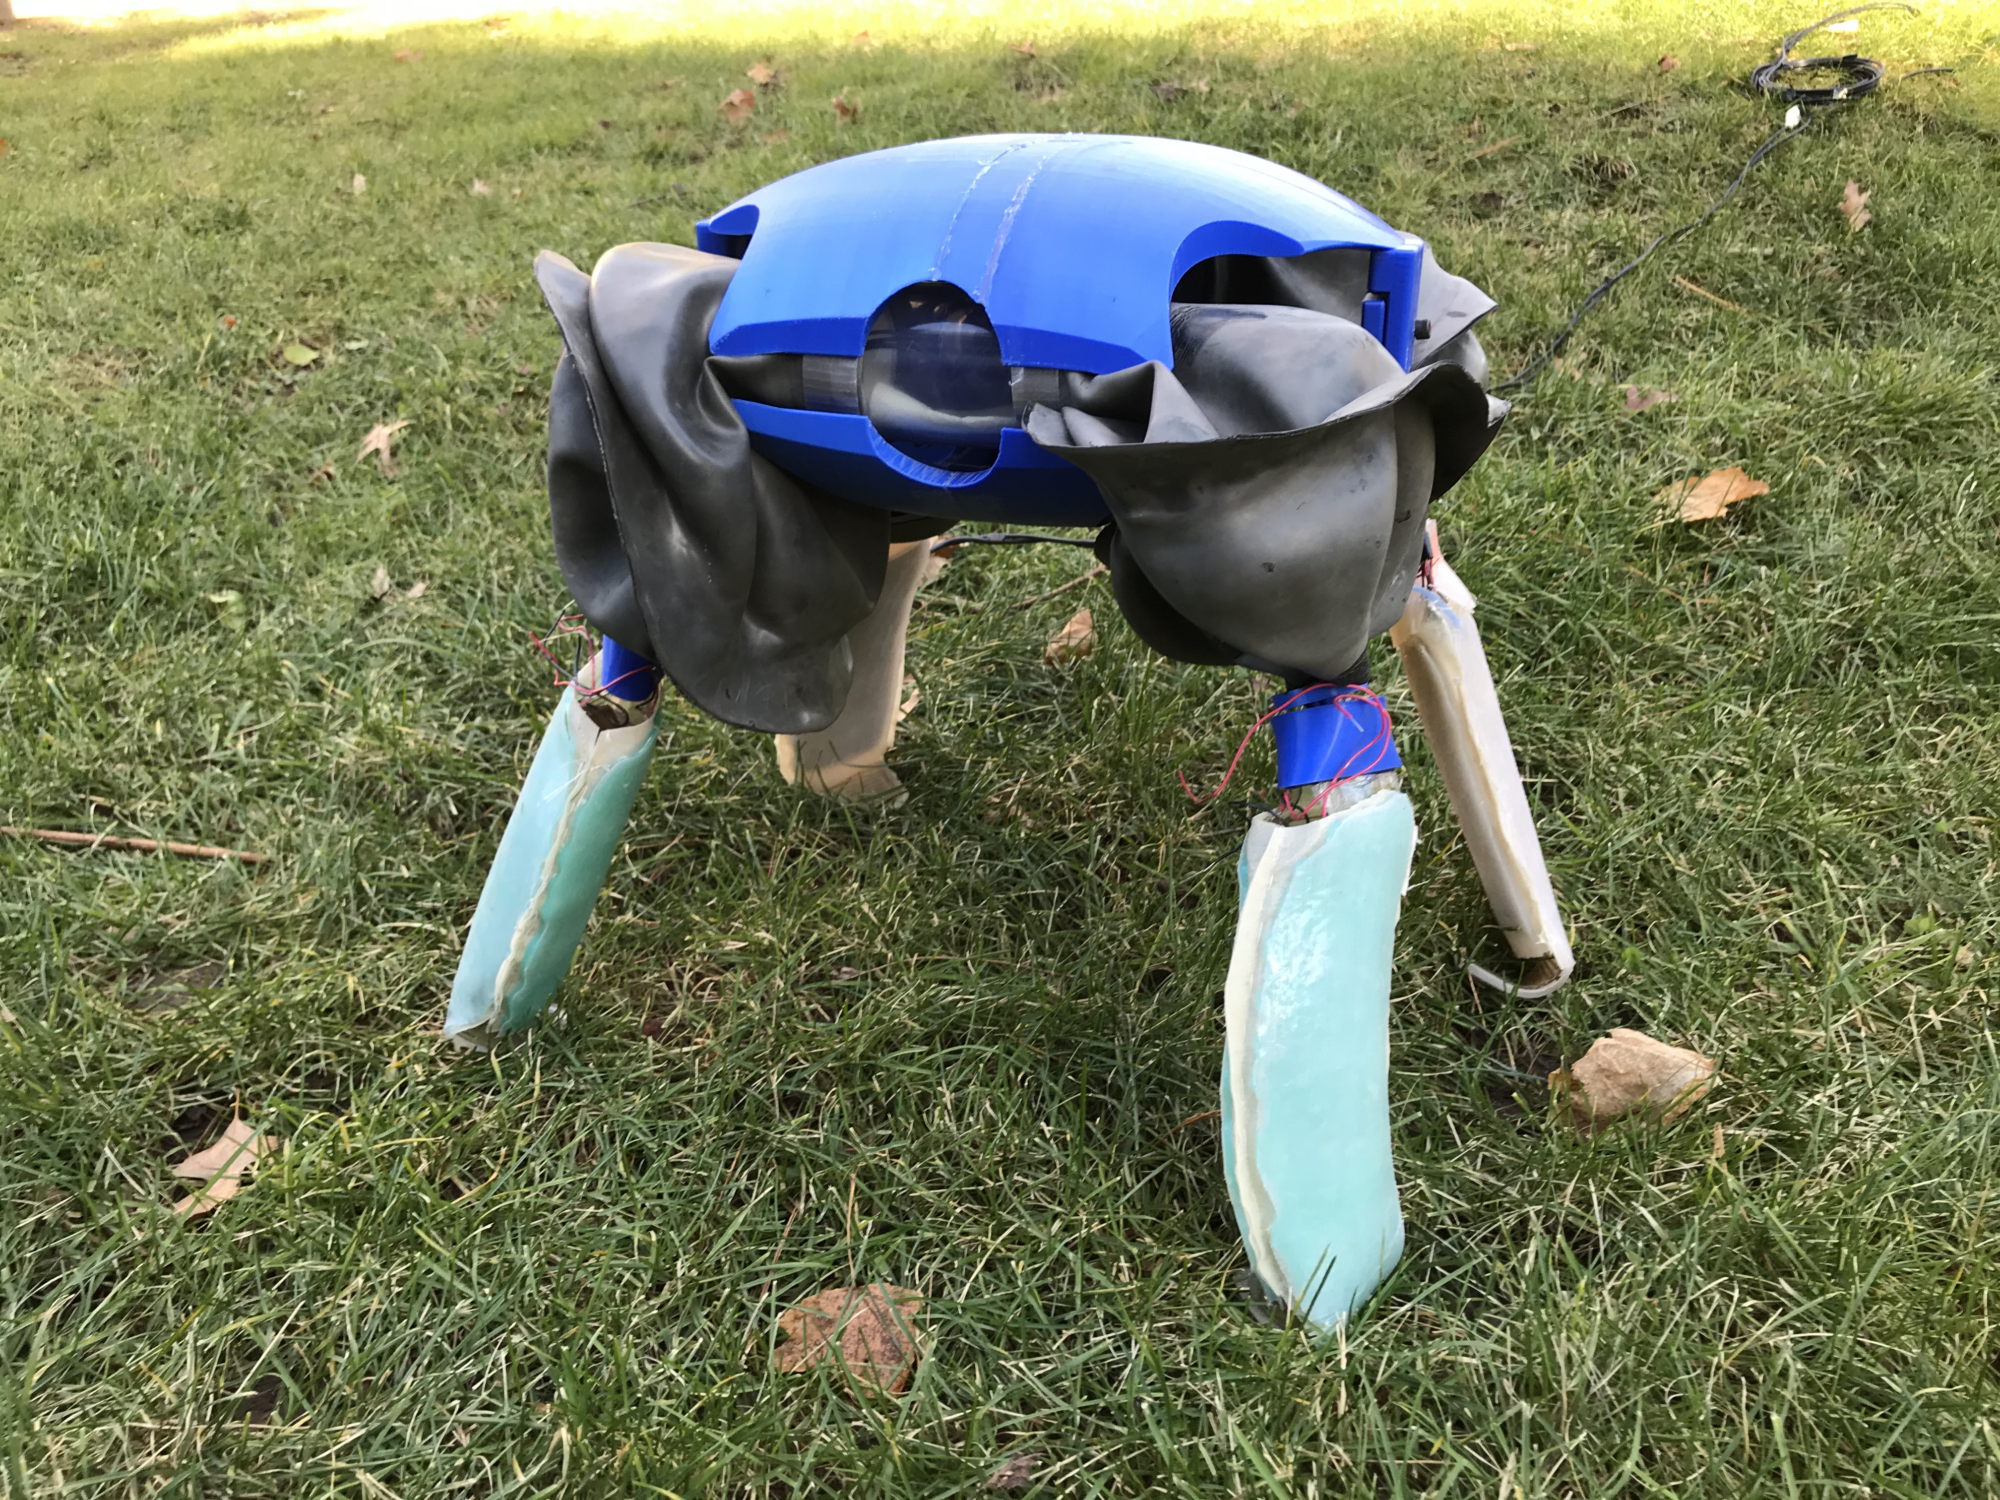 ART turtle robot on the grass